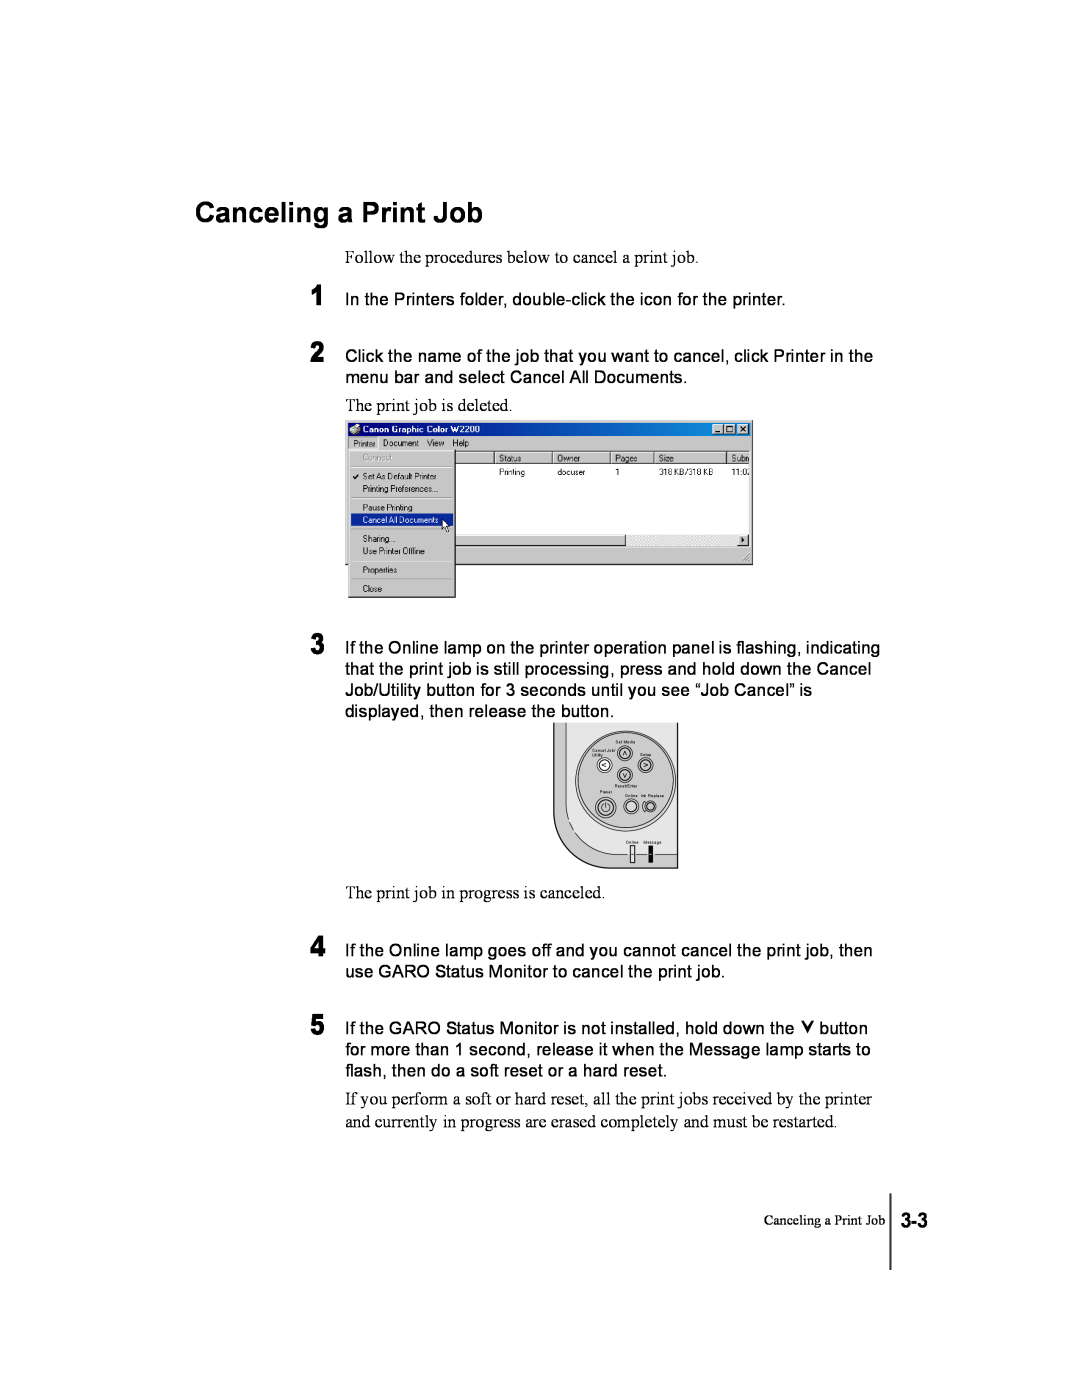 Canon W2200 manual Canceling a Print Job 